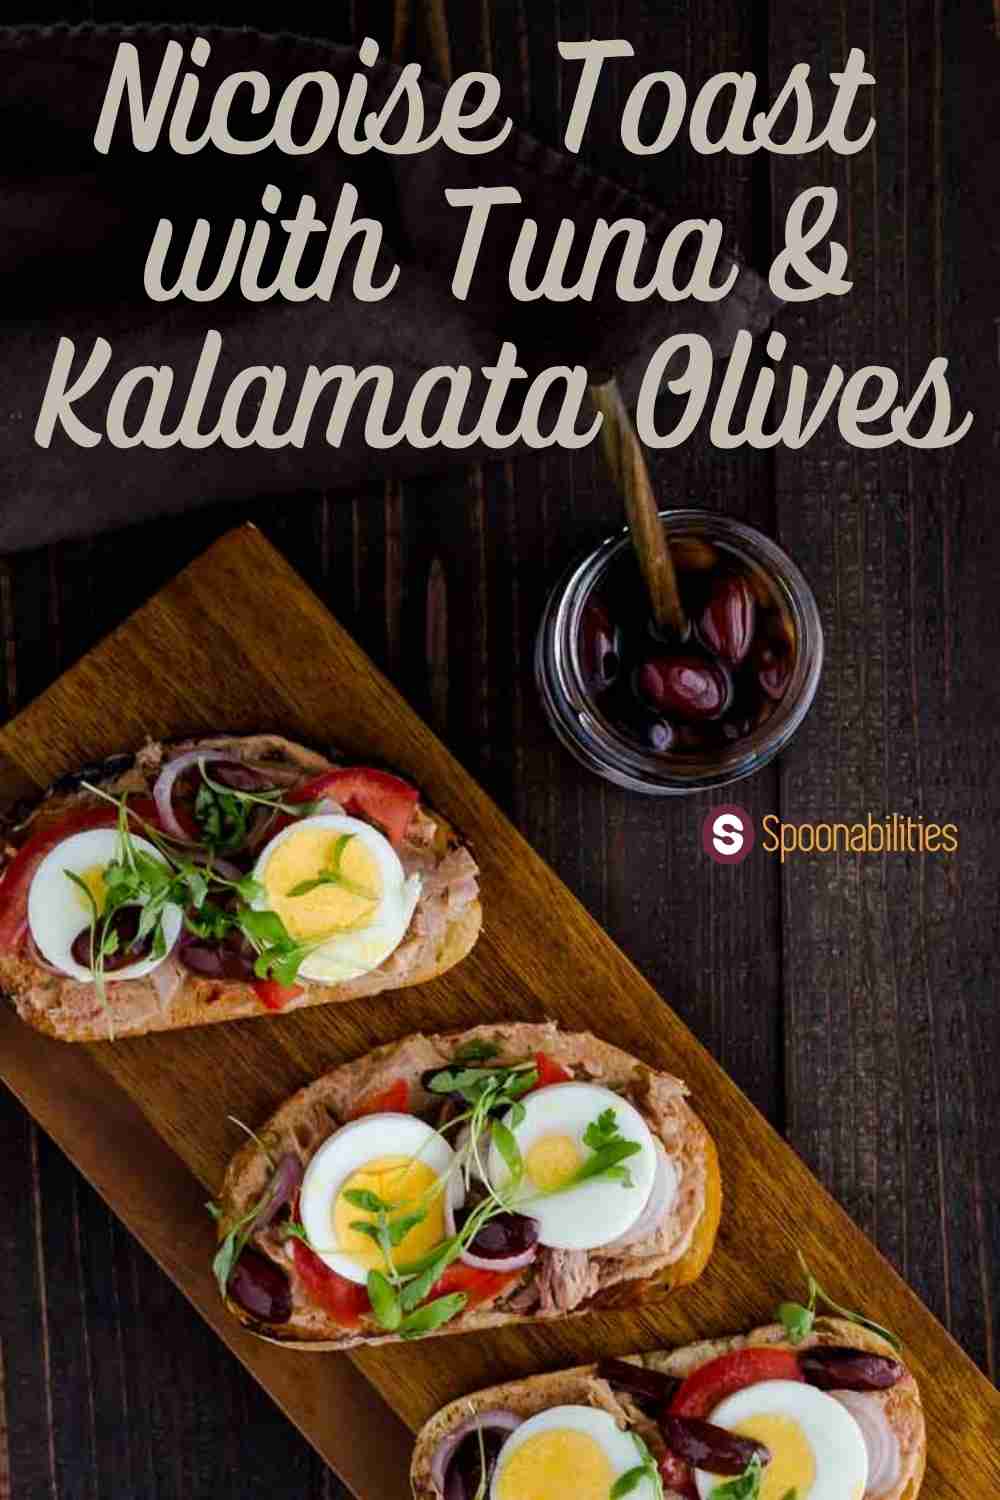 Nicoise Toast with Tuna Fish & Kalamata Olives